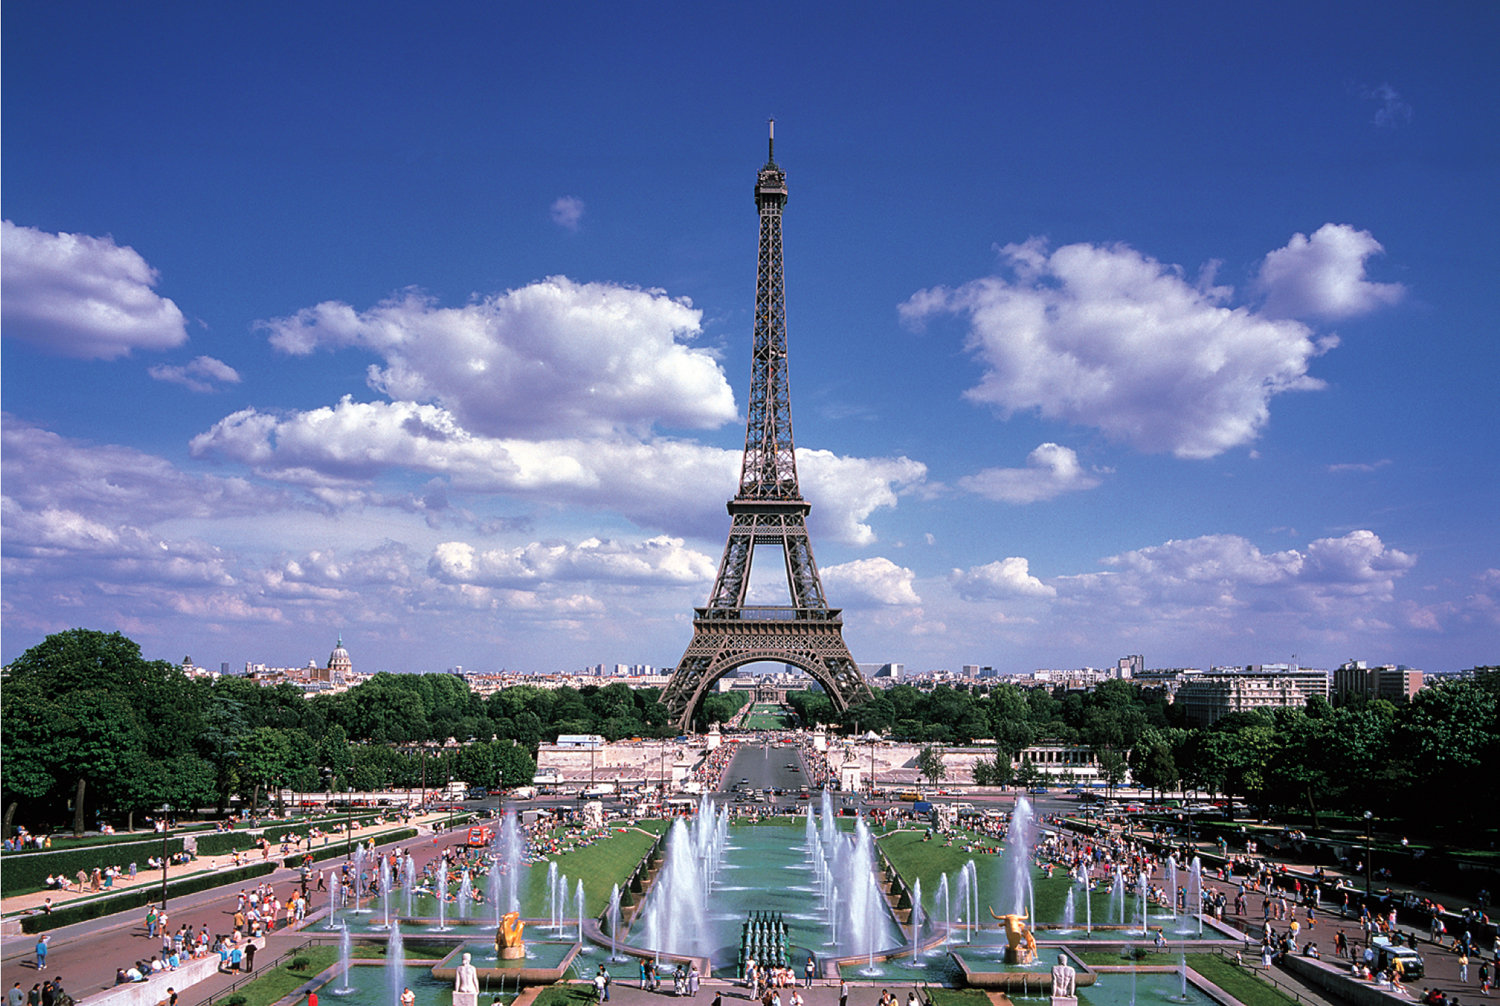 Eiffel Tower, France Landmarks & Monuments Jigsaw Puzzle